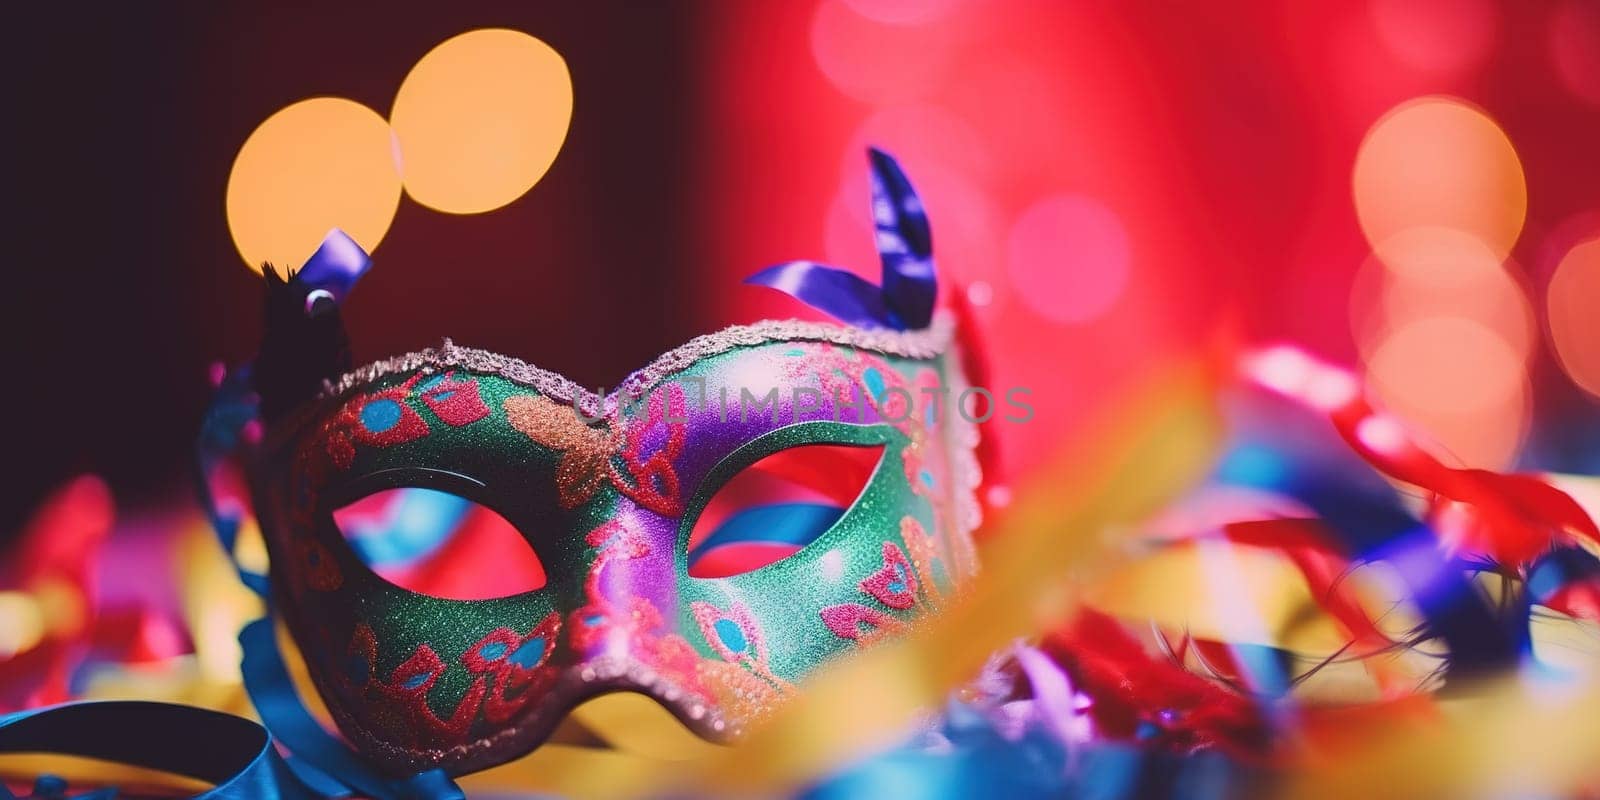 Venetian Carnival Mask For A Party by tan4ikk1